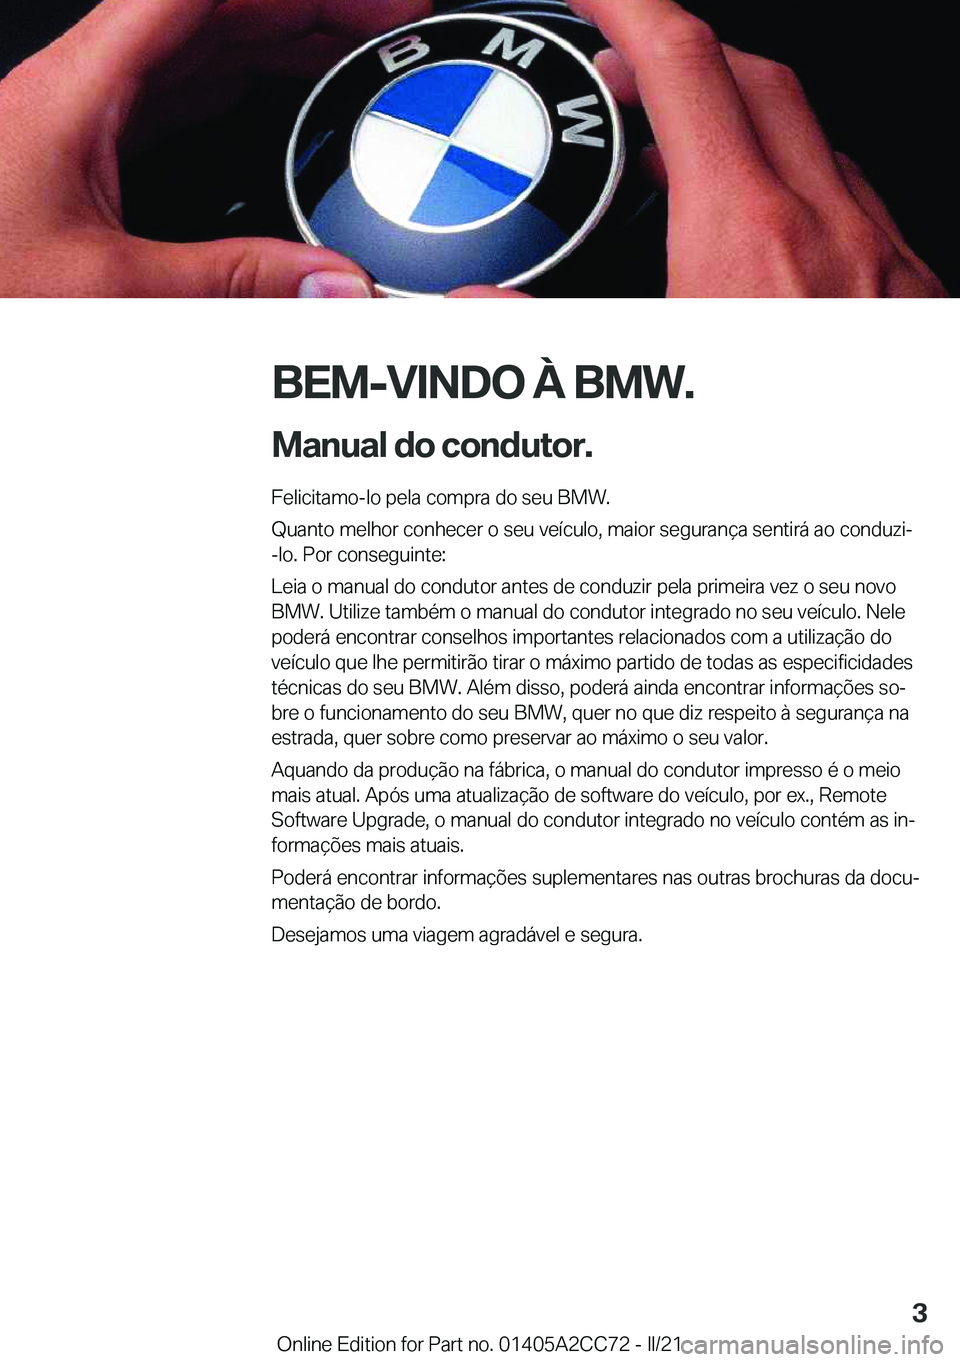 BMW 8 SERIES GRAN COUPE 2022  Manual do condutor (in Portuguese) �B�E�M�-�V�I�N�D�O��À��B�M�W�.
�M�a�n�u�a�l��d�o��c�o�n�d�u�t�o�r�. �F�e�l�i�c�i�t�a�m�o�-�l�o��p�e�l�a��c�o�m�p�r�a��d�o��s�e�u��B�M�W�.
�Q�u�a�n�t�o��m�e�l�h�o�r��c�o�n�h�e�c�e�r��o��s